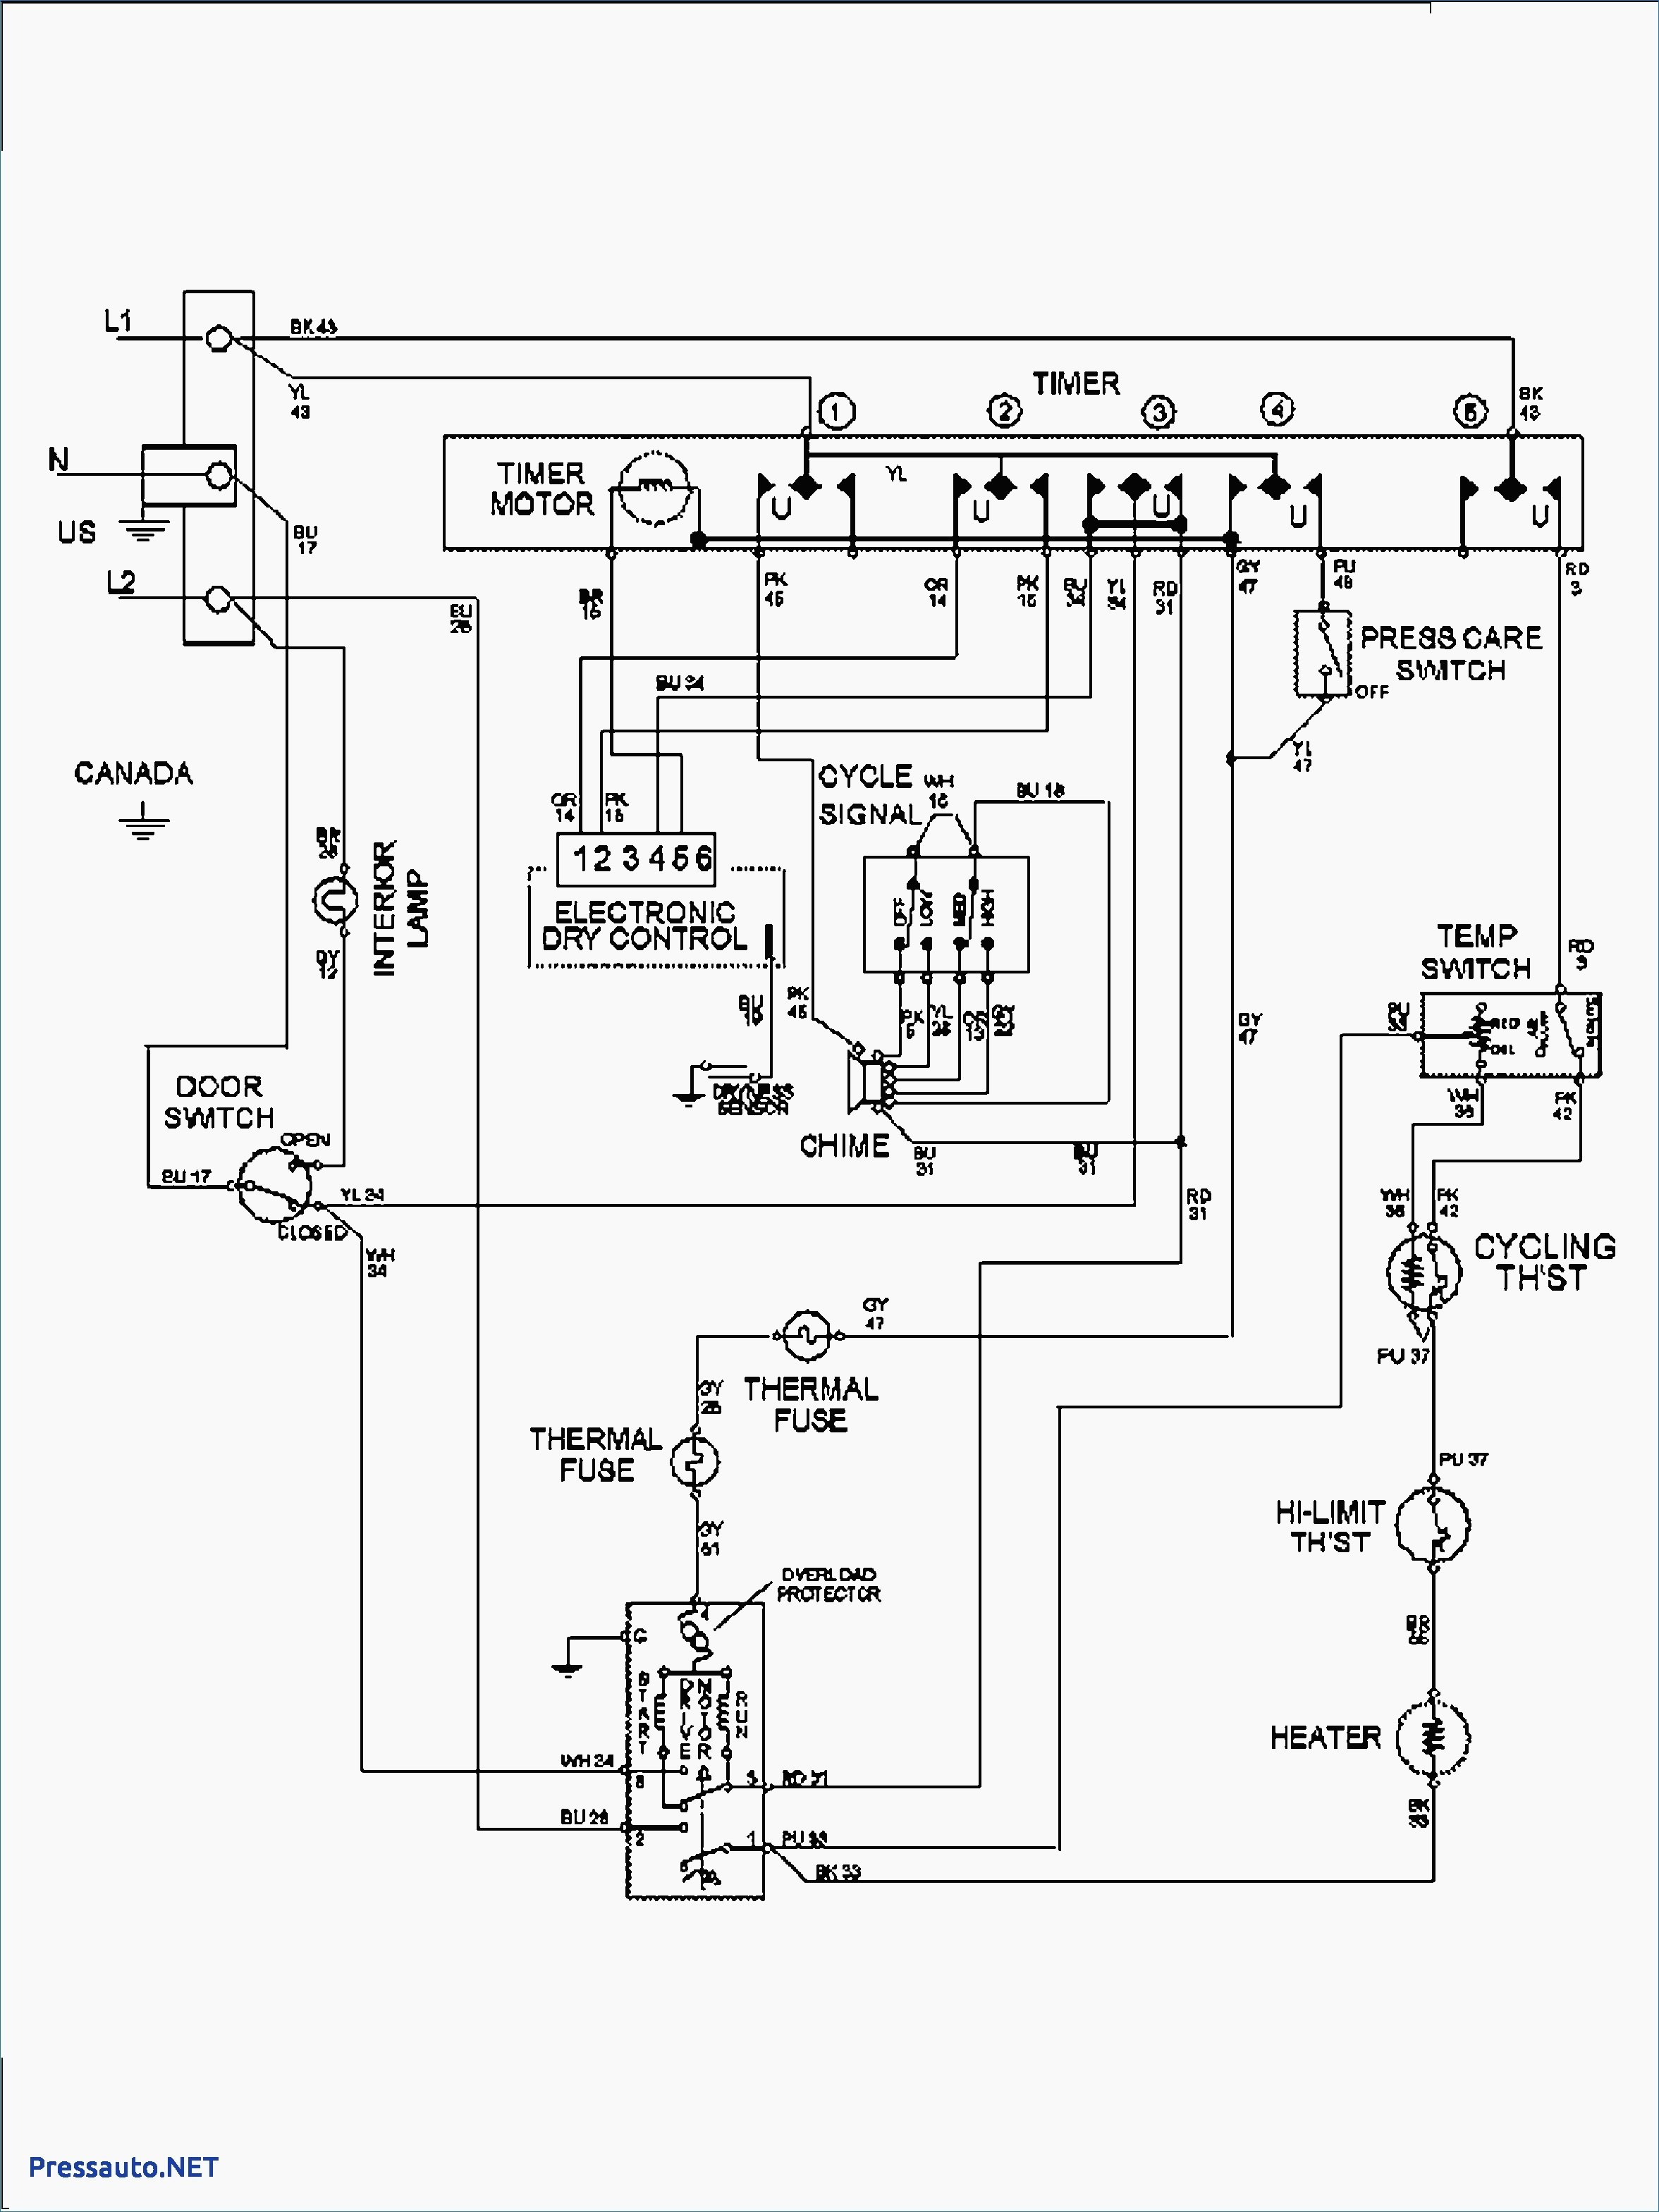 Wiring Diagram Appliance Dryer Inspirationa Amana Dryer Wiring Diagram Fresh for Whirlpool Unbelievable Chromatex